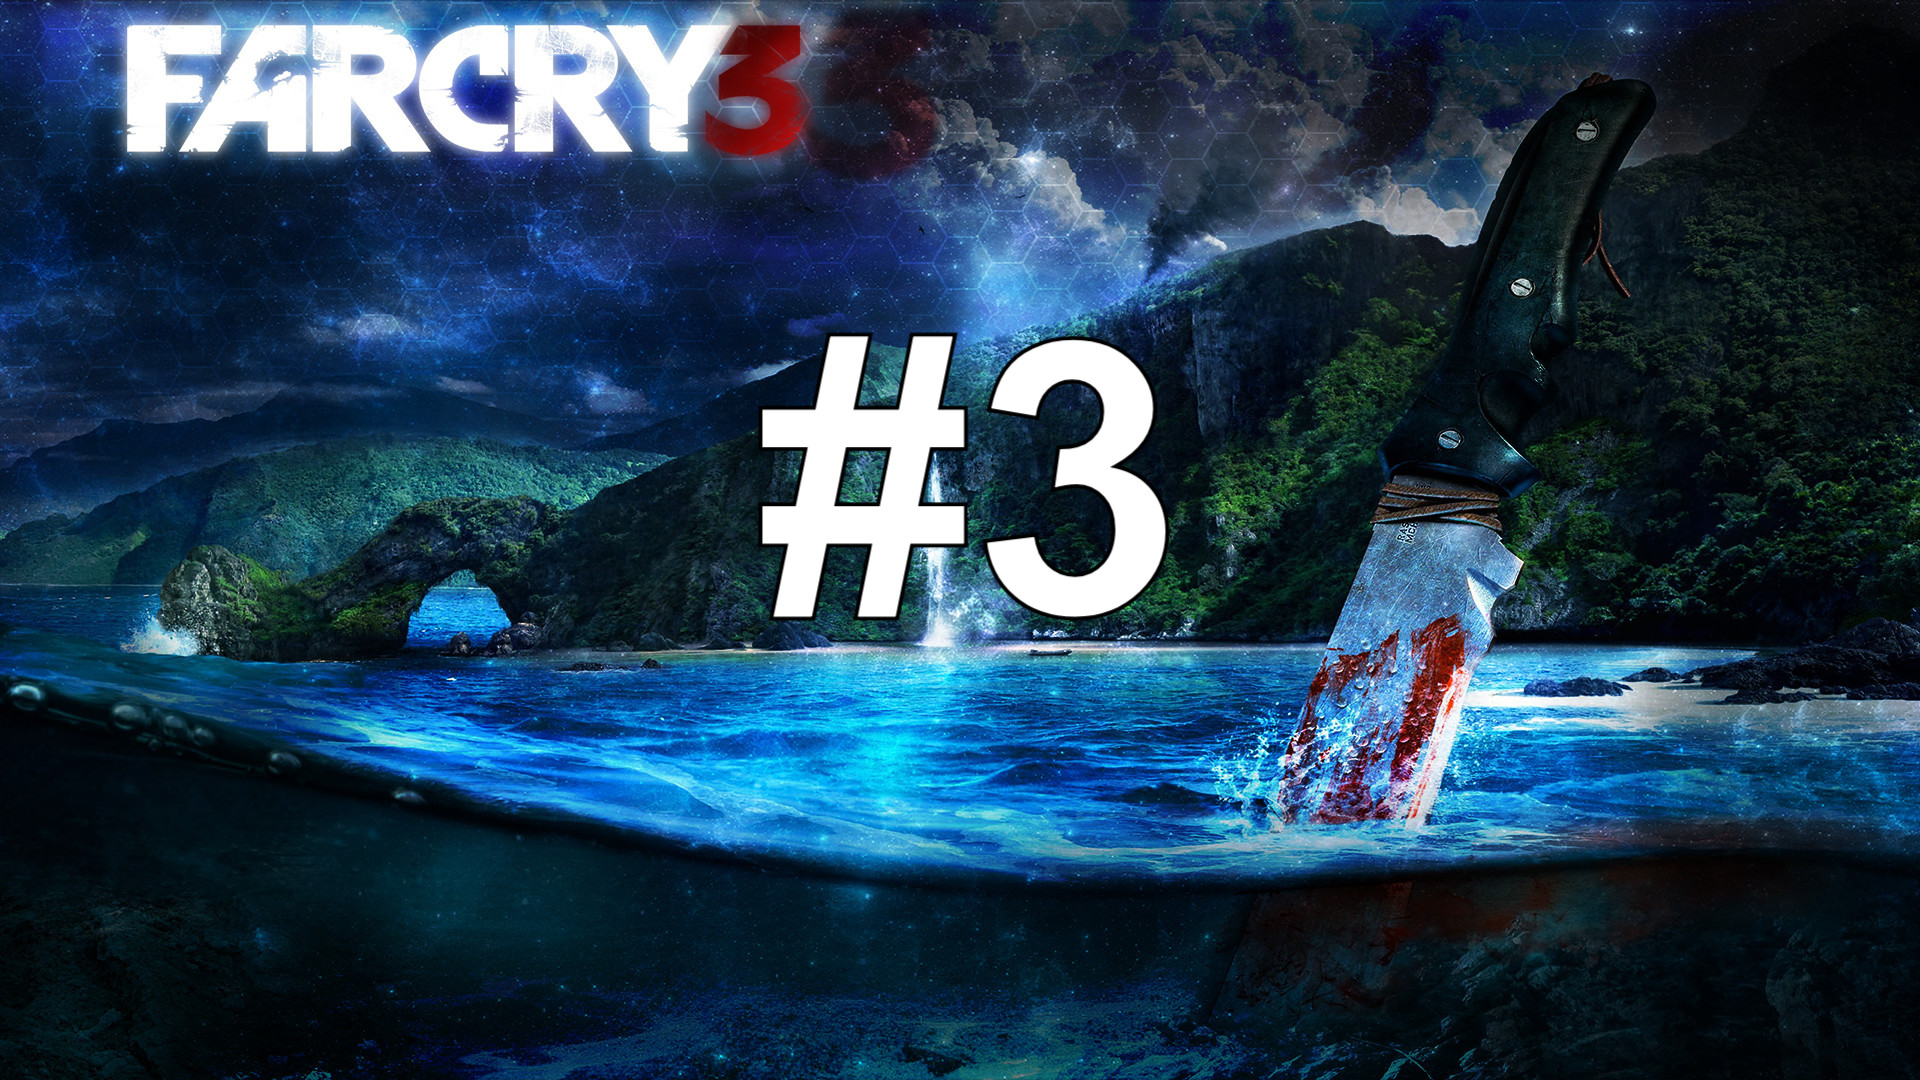 ИГРА В ГРАБИТЕЛЯ ► Far Cry 3 #3